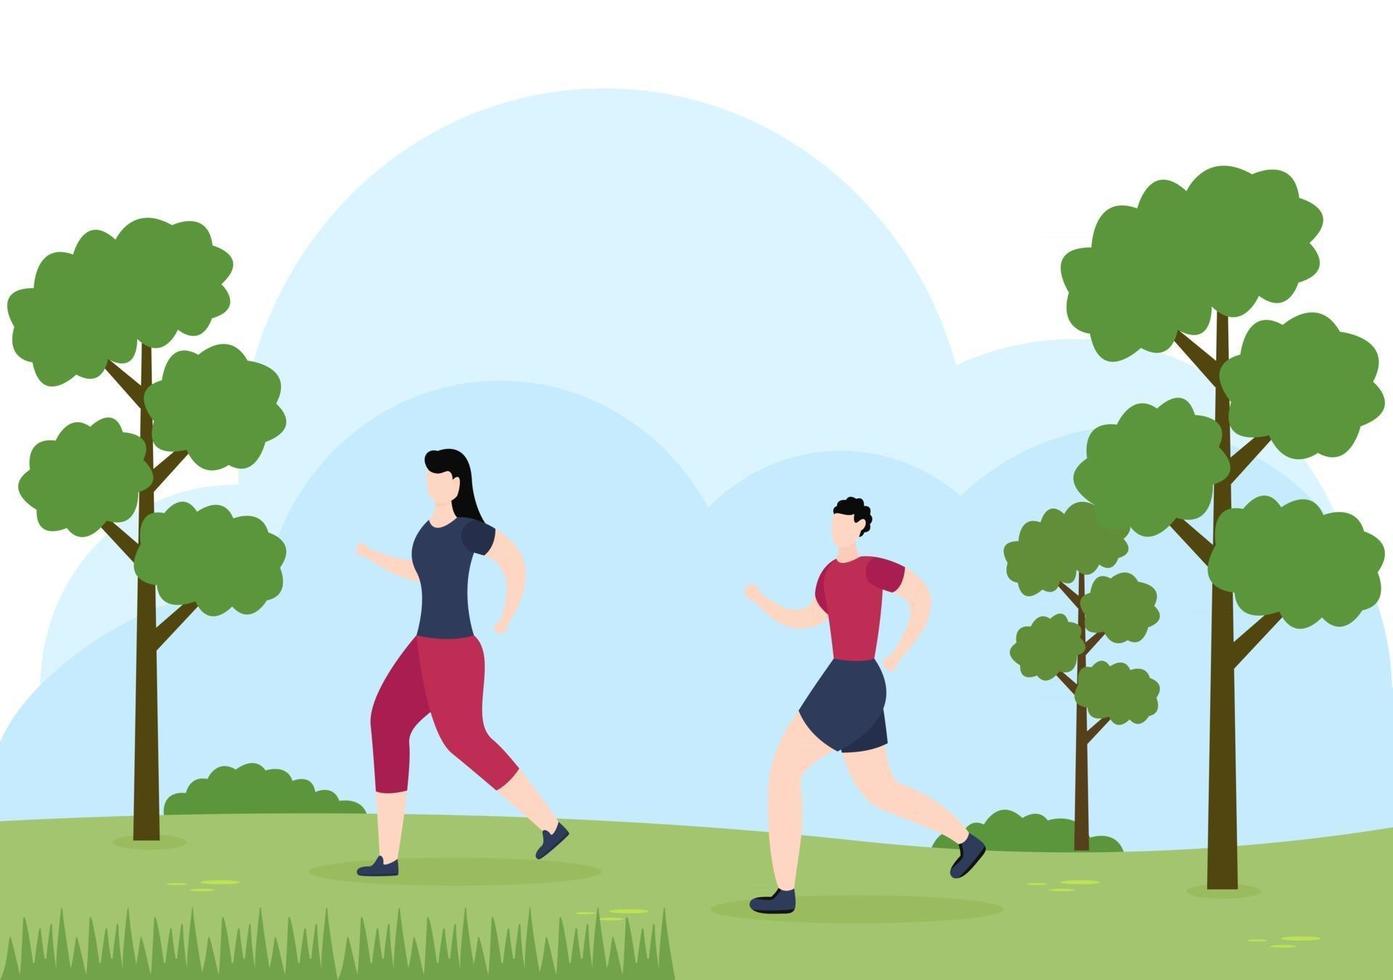 Jogging or Running Sports Background Illustration vector